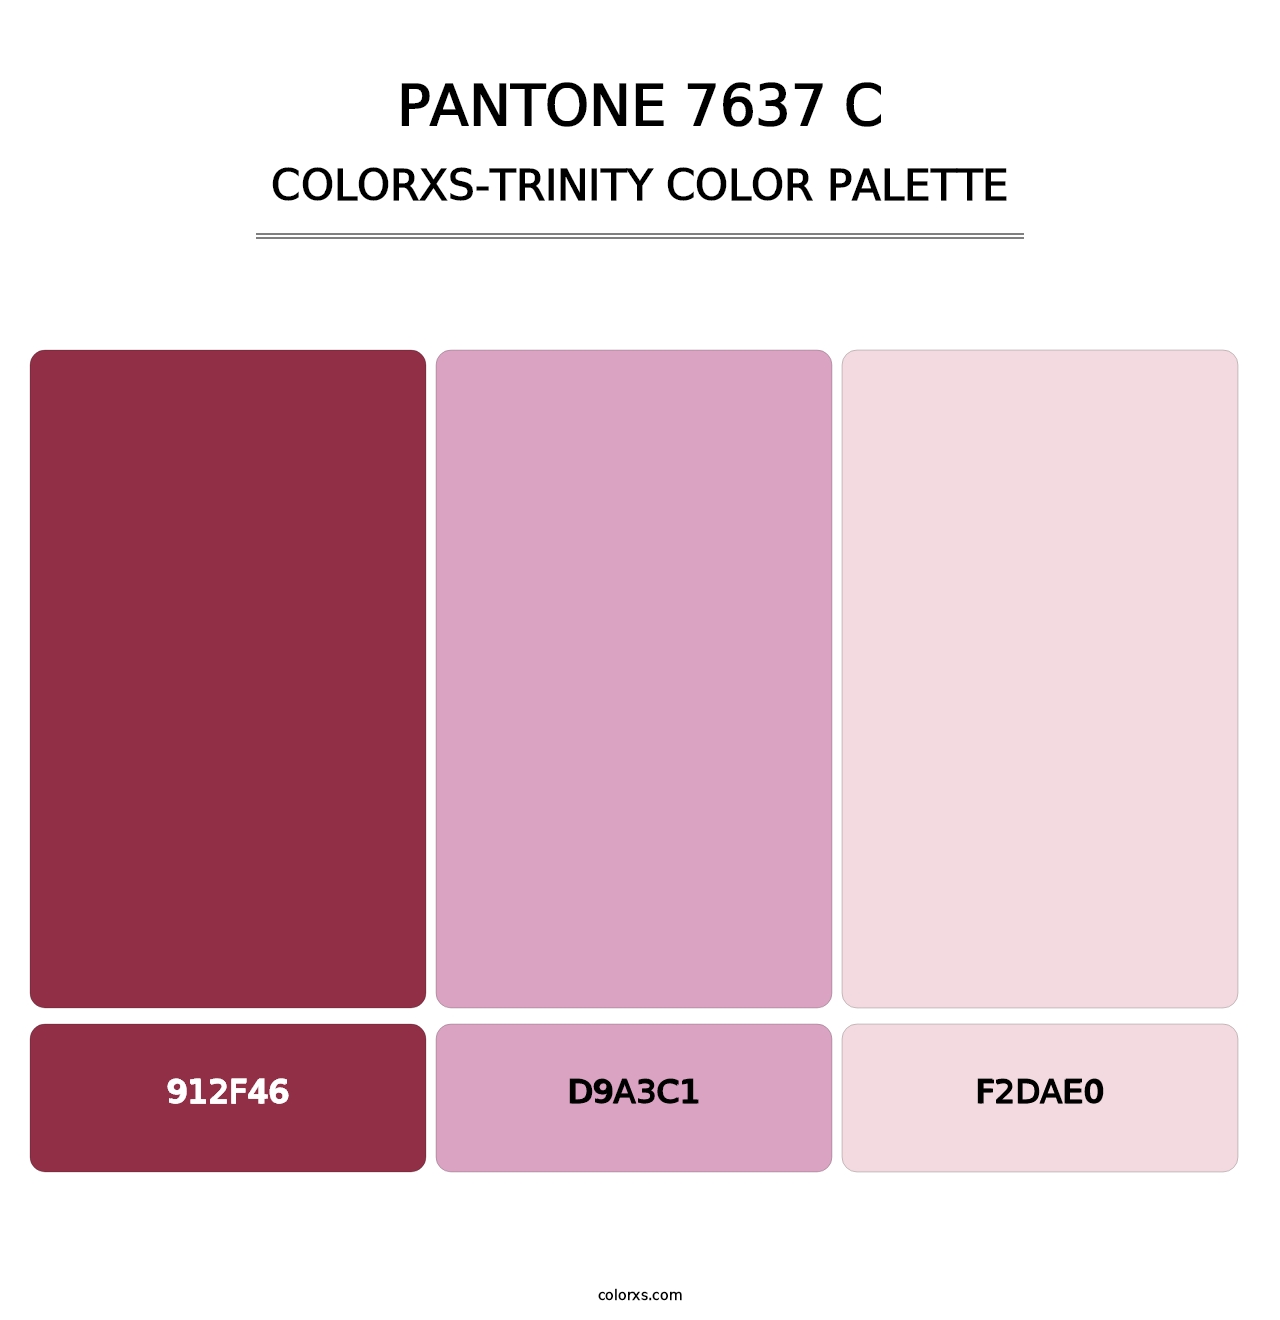 PANTONE 7637 C - Colorxs Trinity Palette